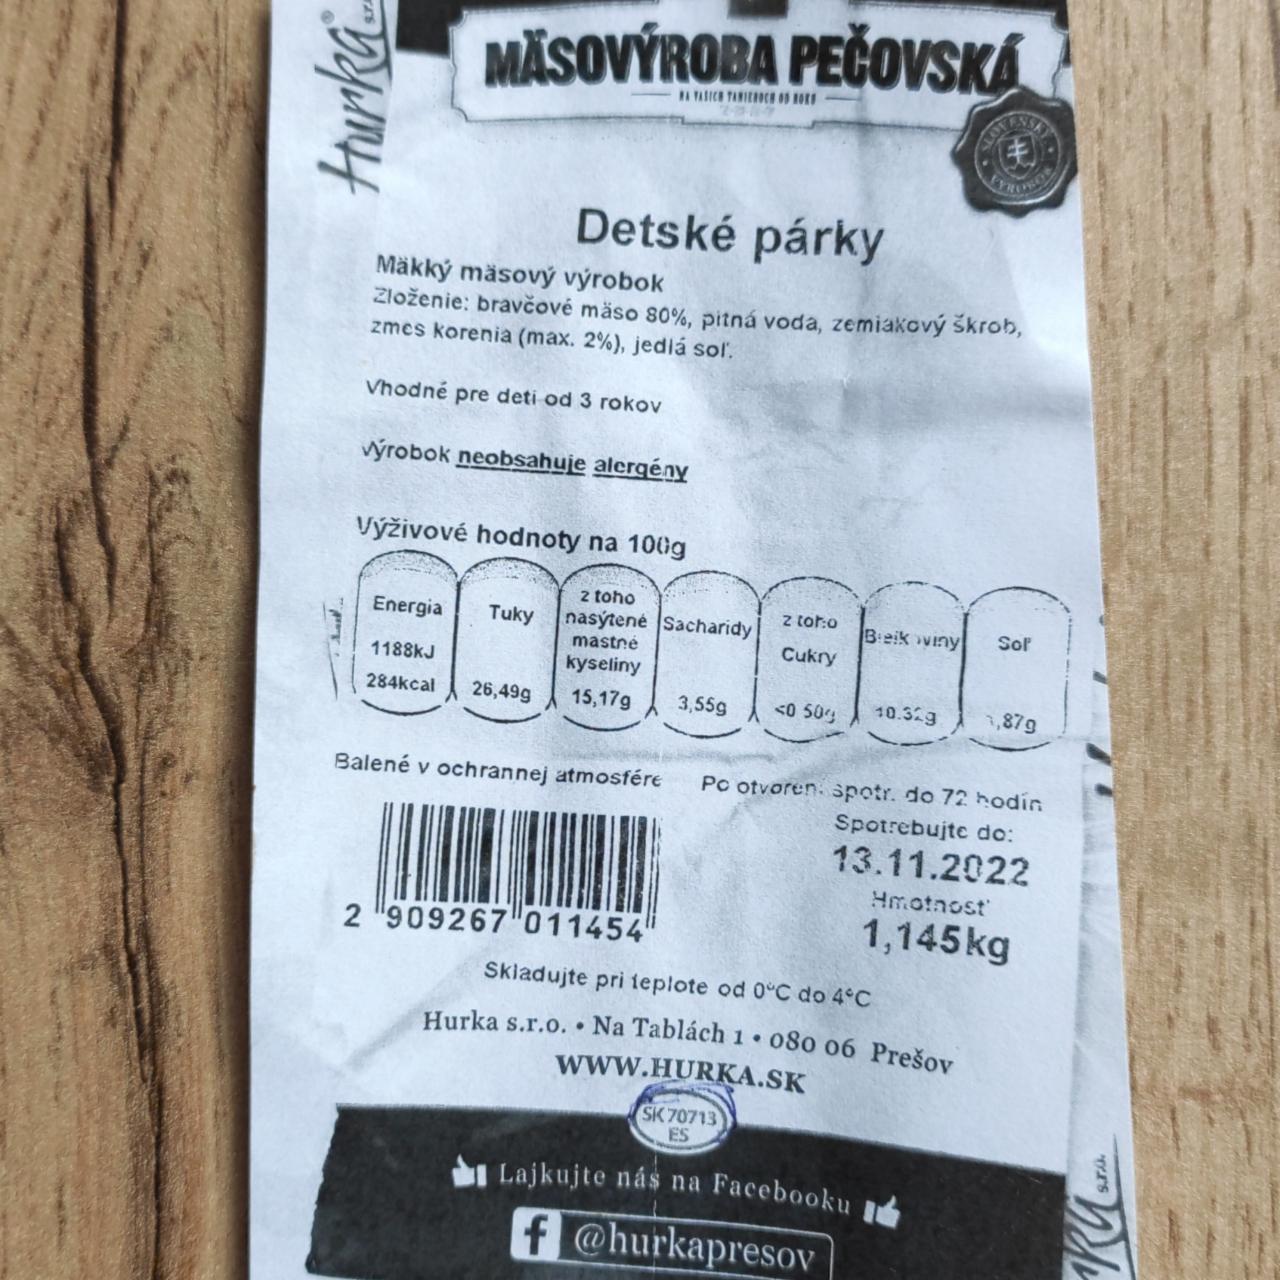 Fotografie - Detské párky Mäsovýroba Pečovská